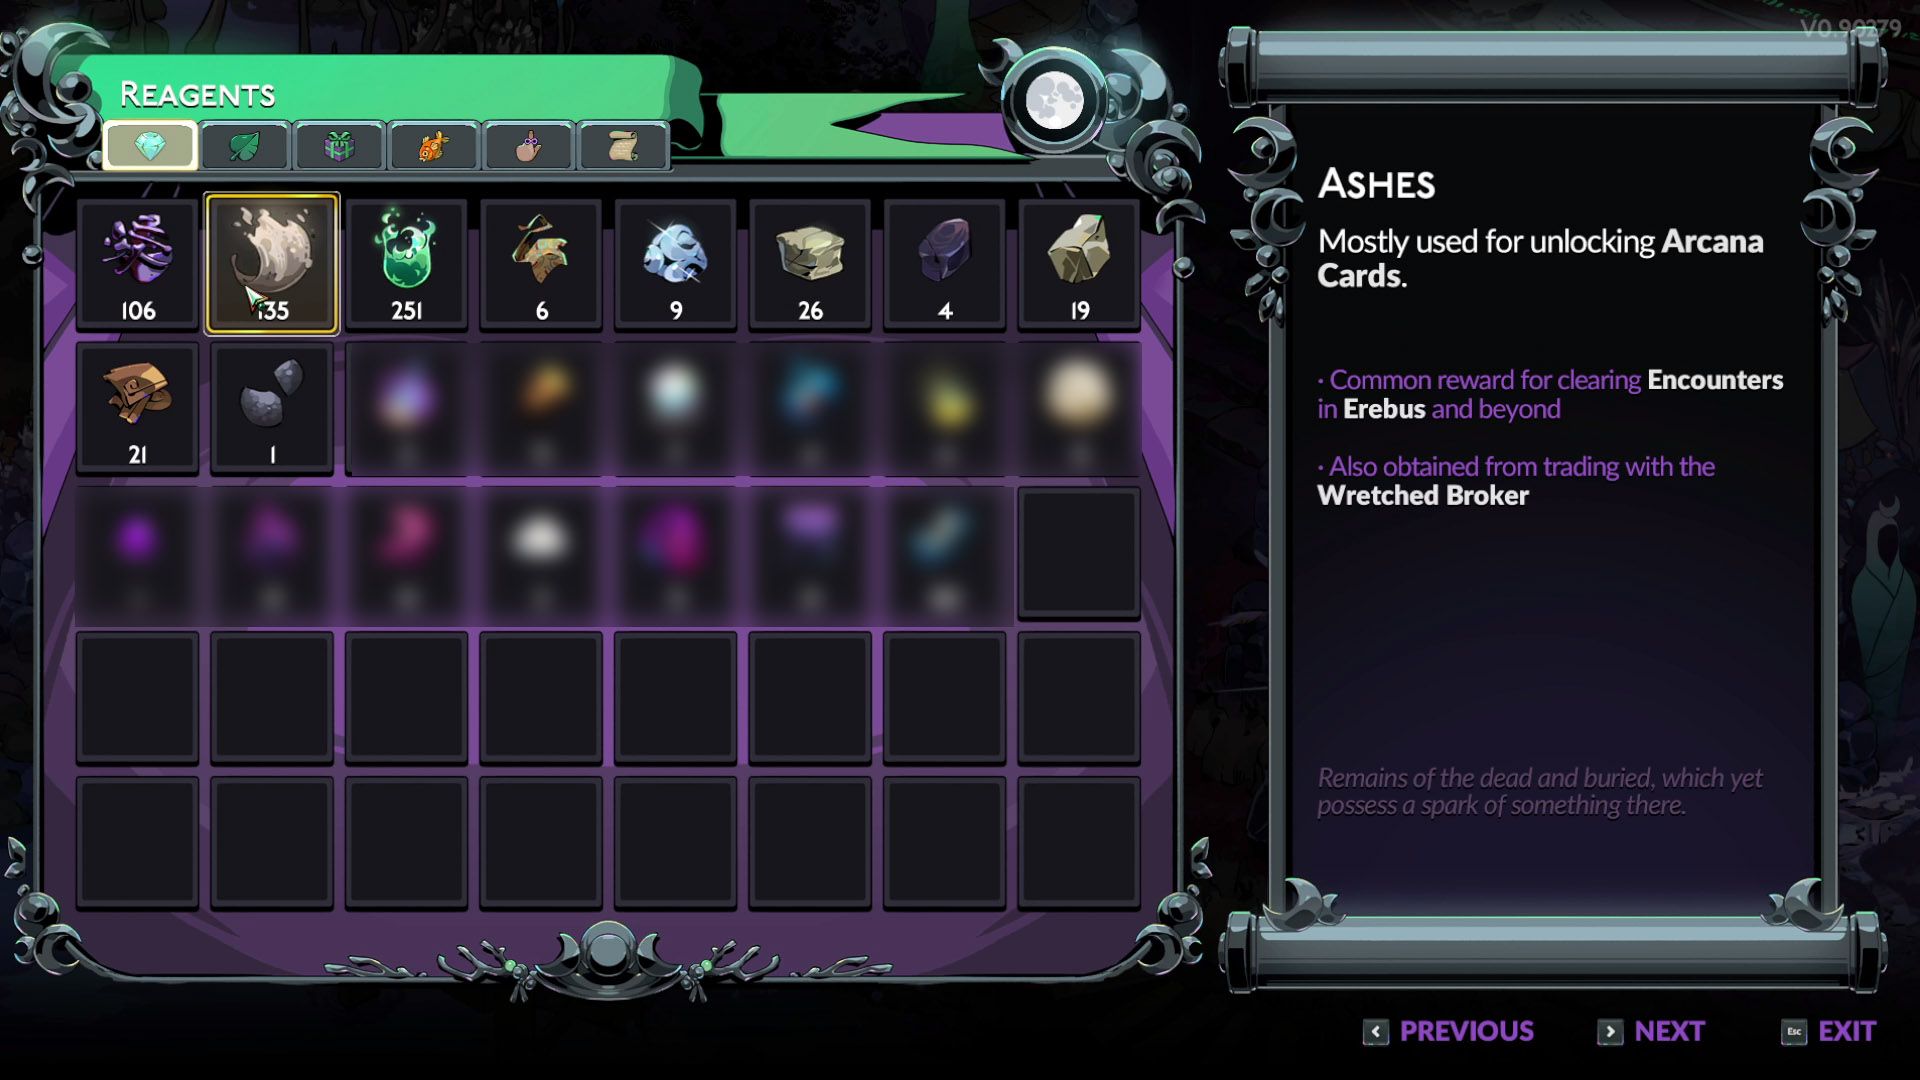 Hades 2 - Ash in Inventory